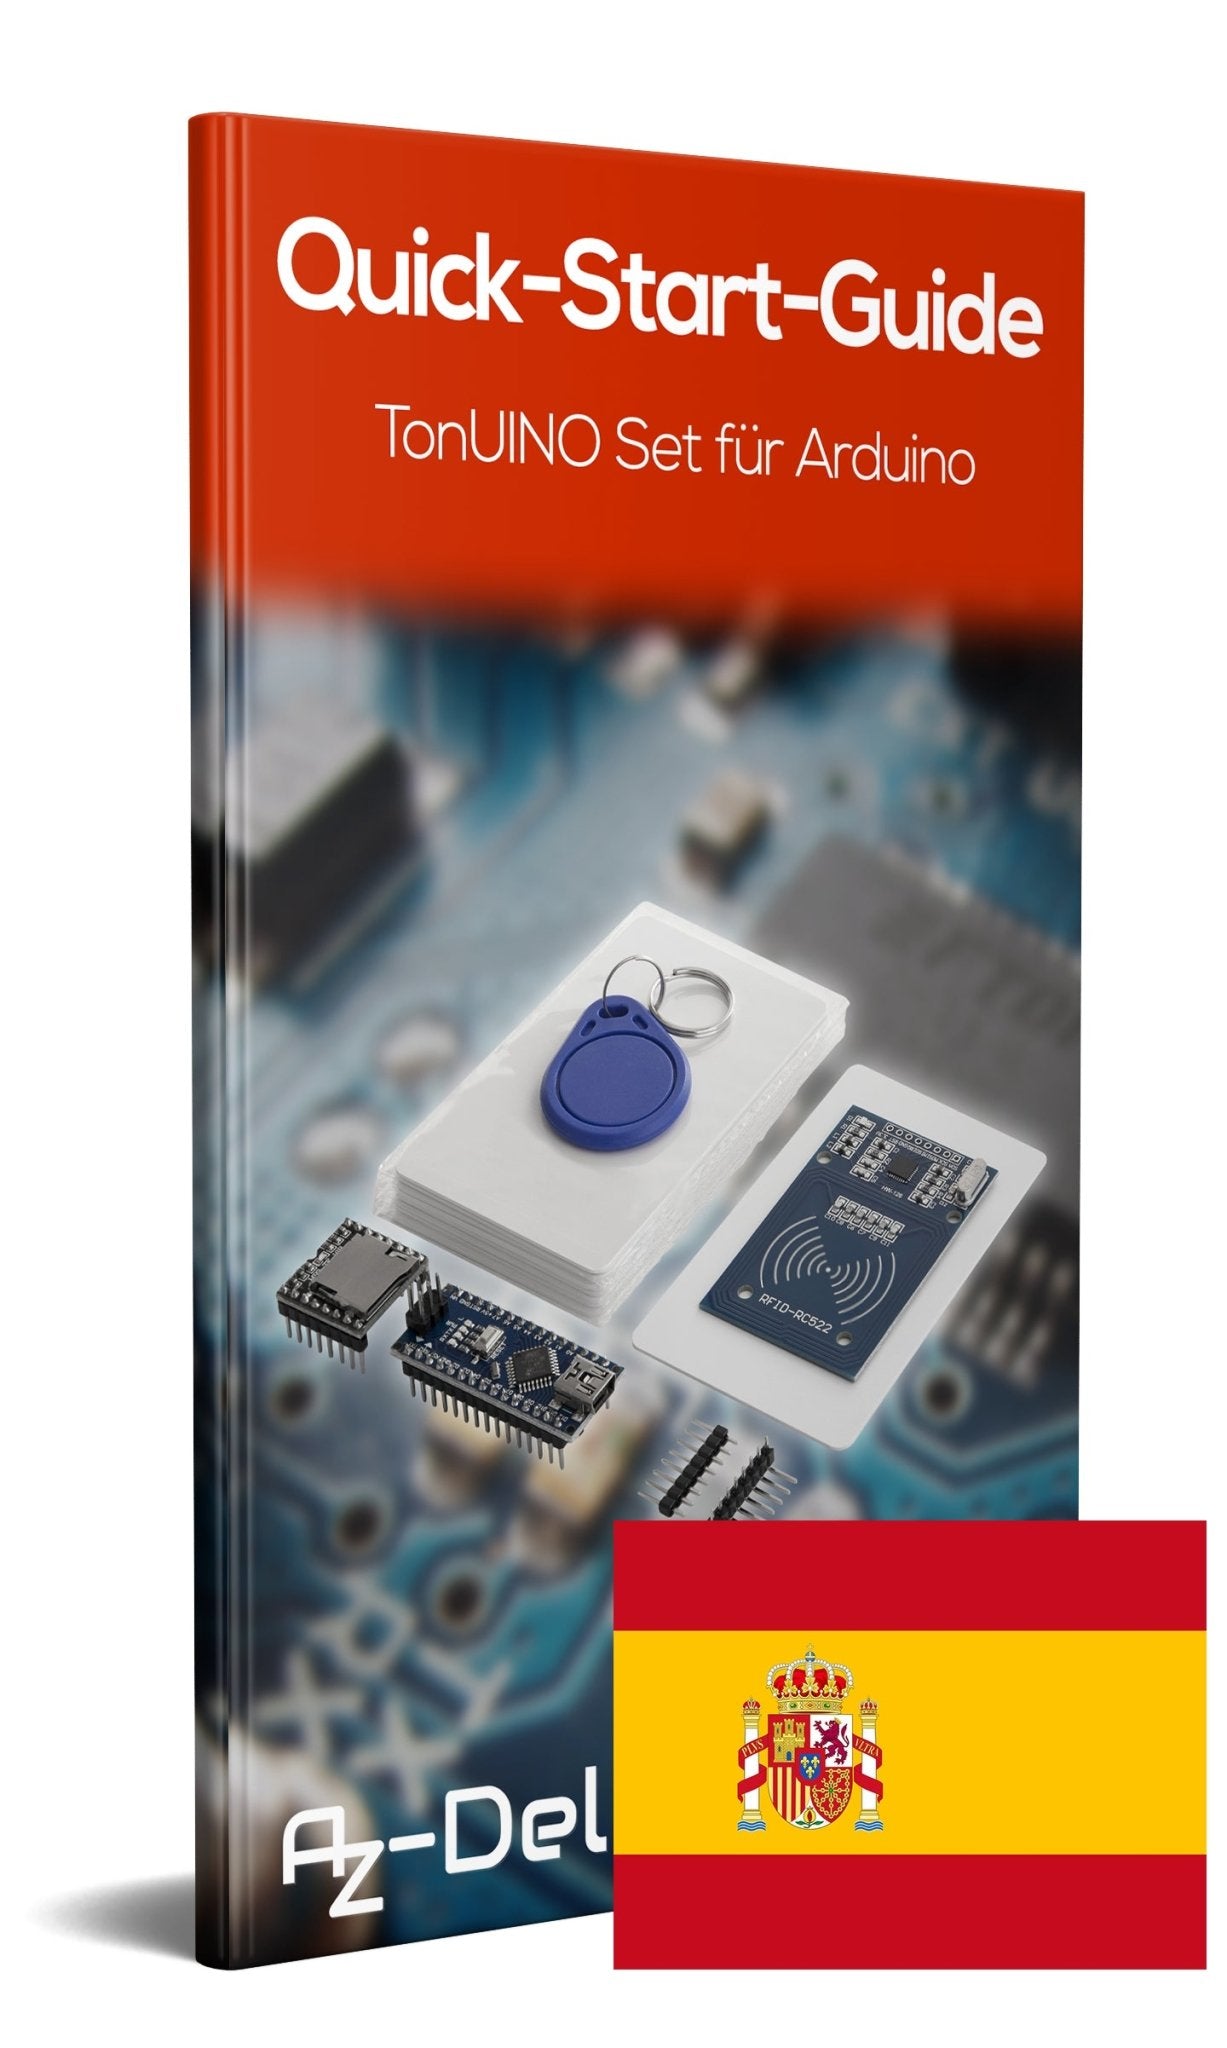 TonUINO Set (Mp3 Player, Nano V3.0, RFID Kit und 10 x 13,56 MHz RFID Karten) - AZ-Delivery